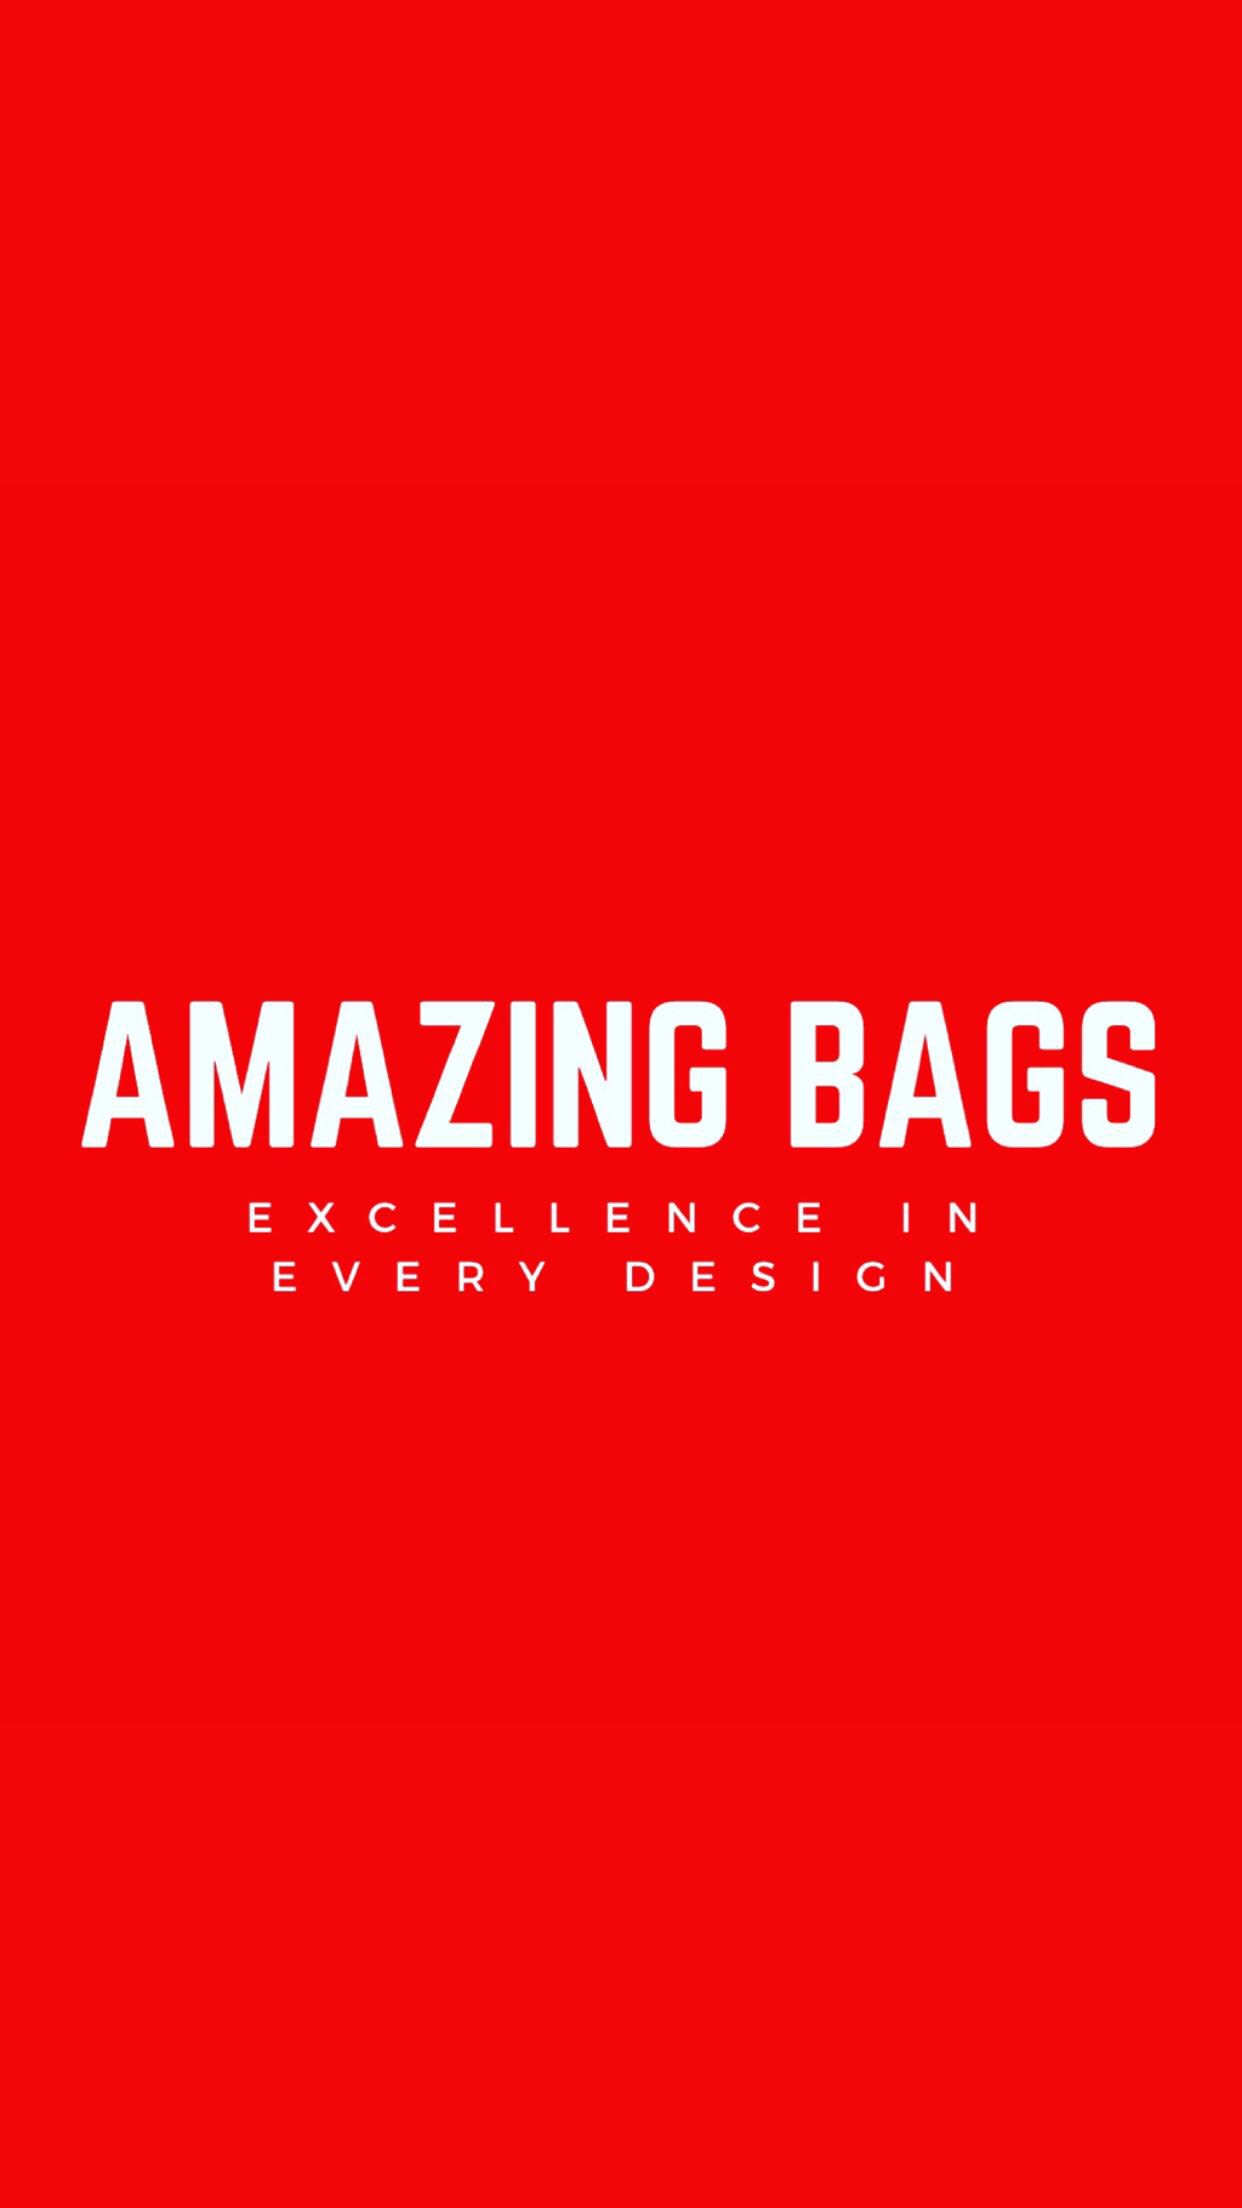 Amazing Bags